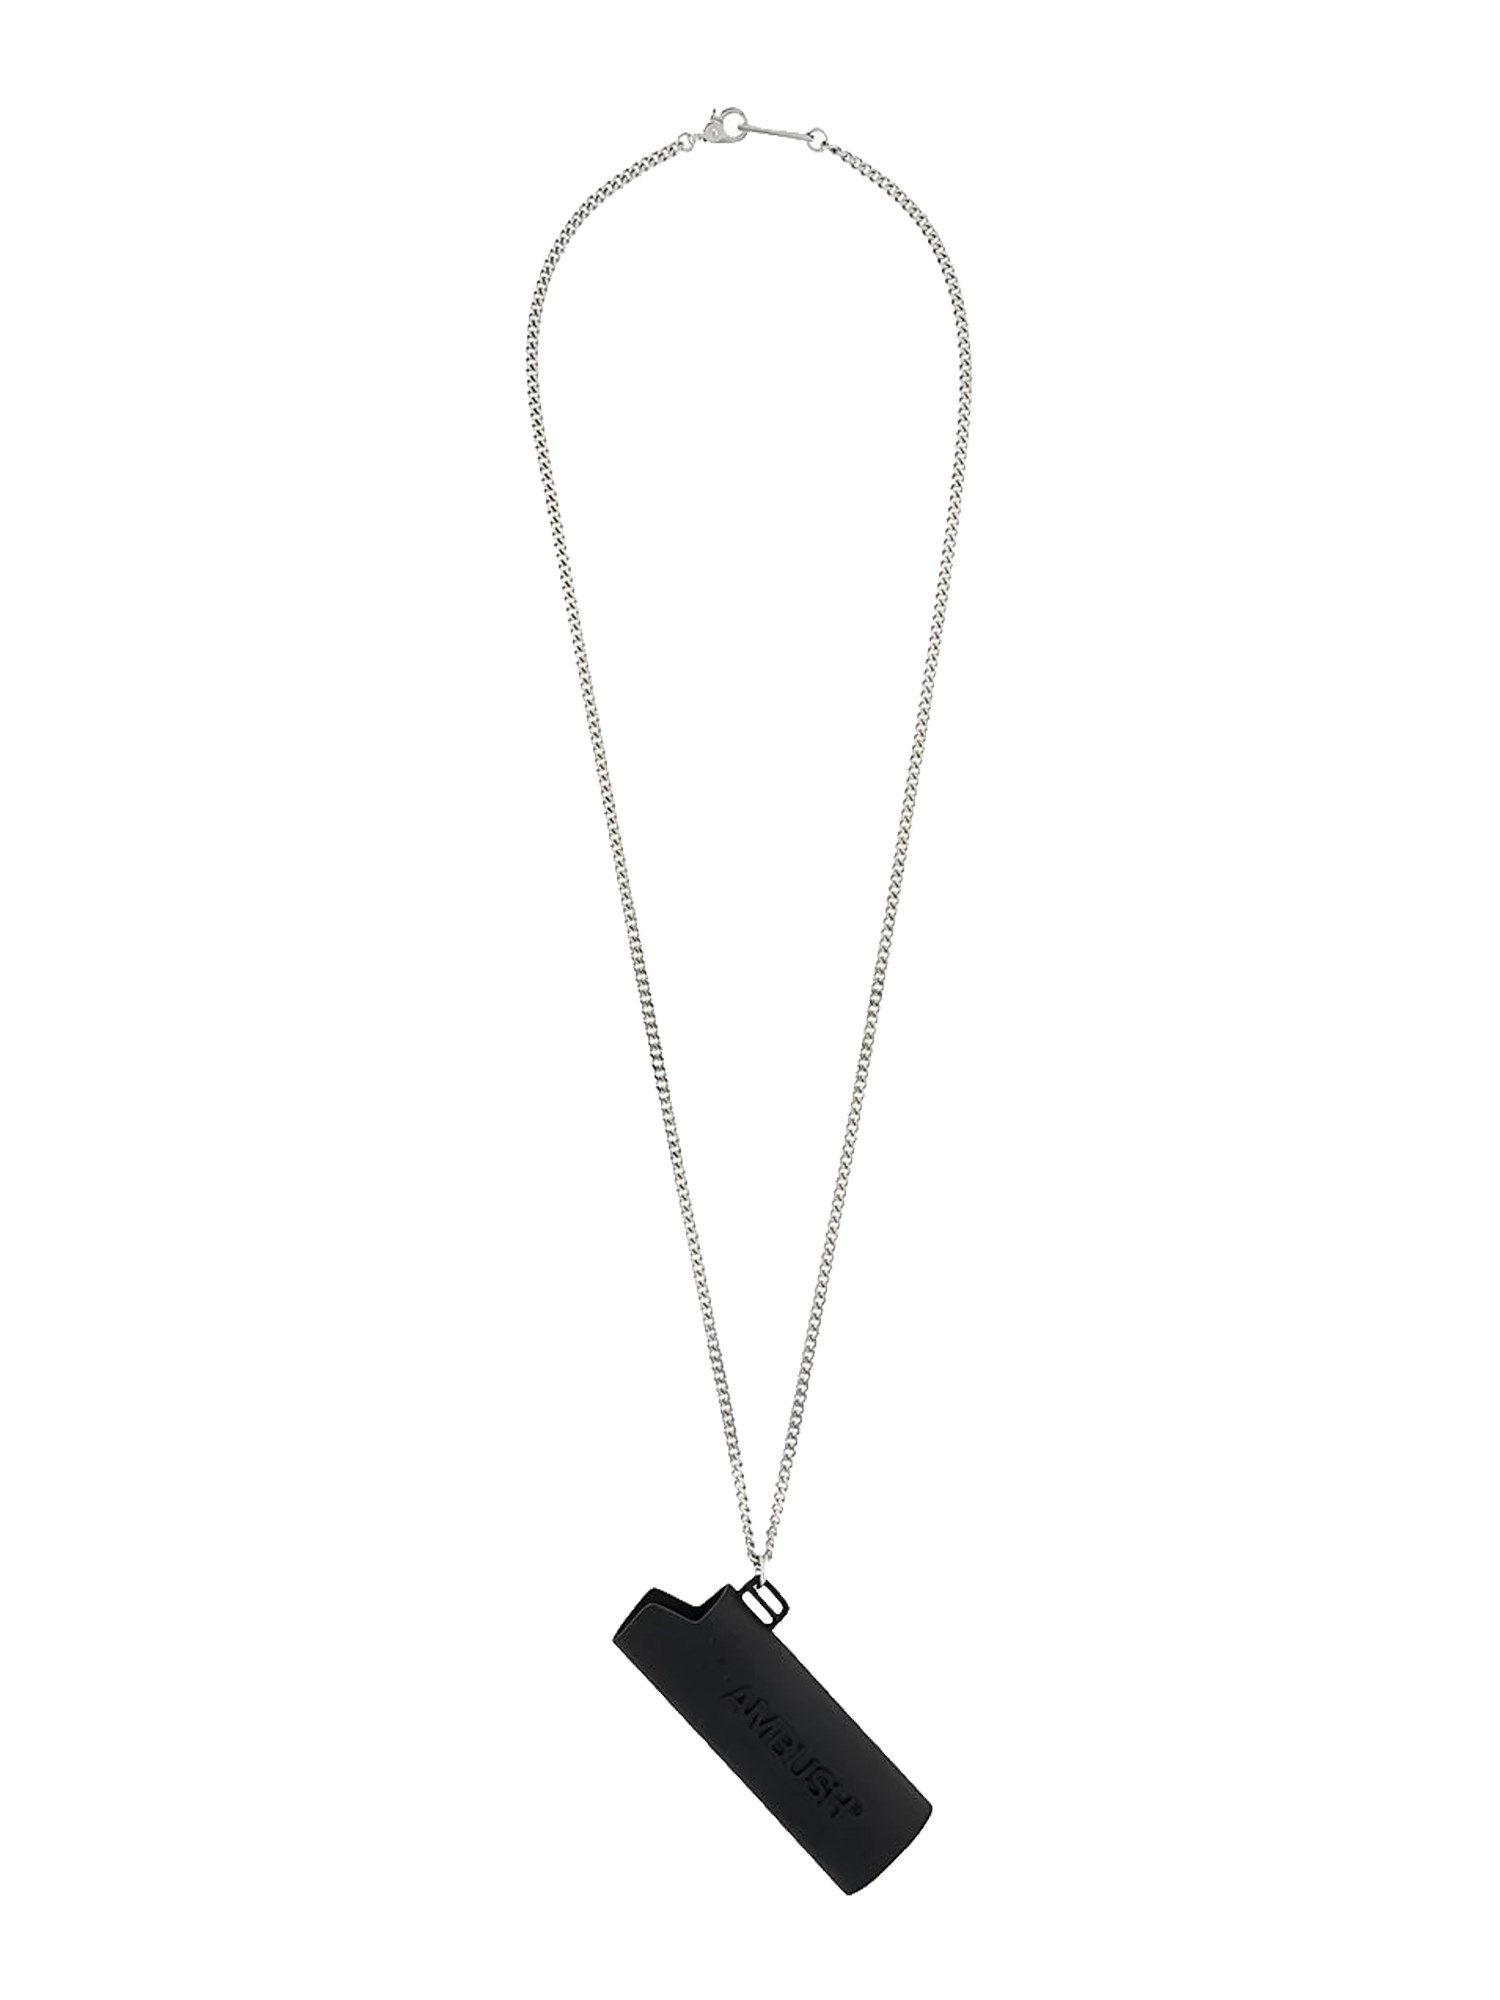 ambush necklace with lighter holder